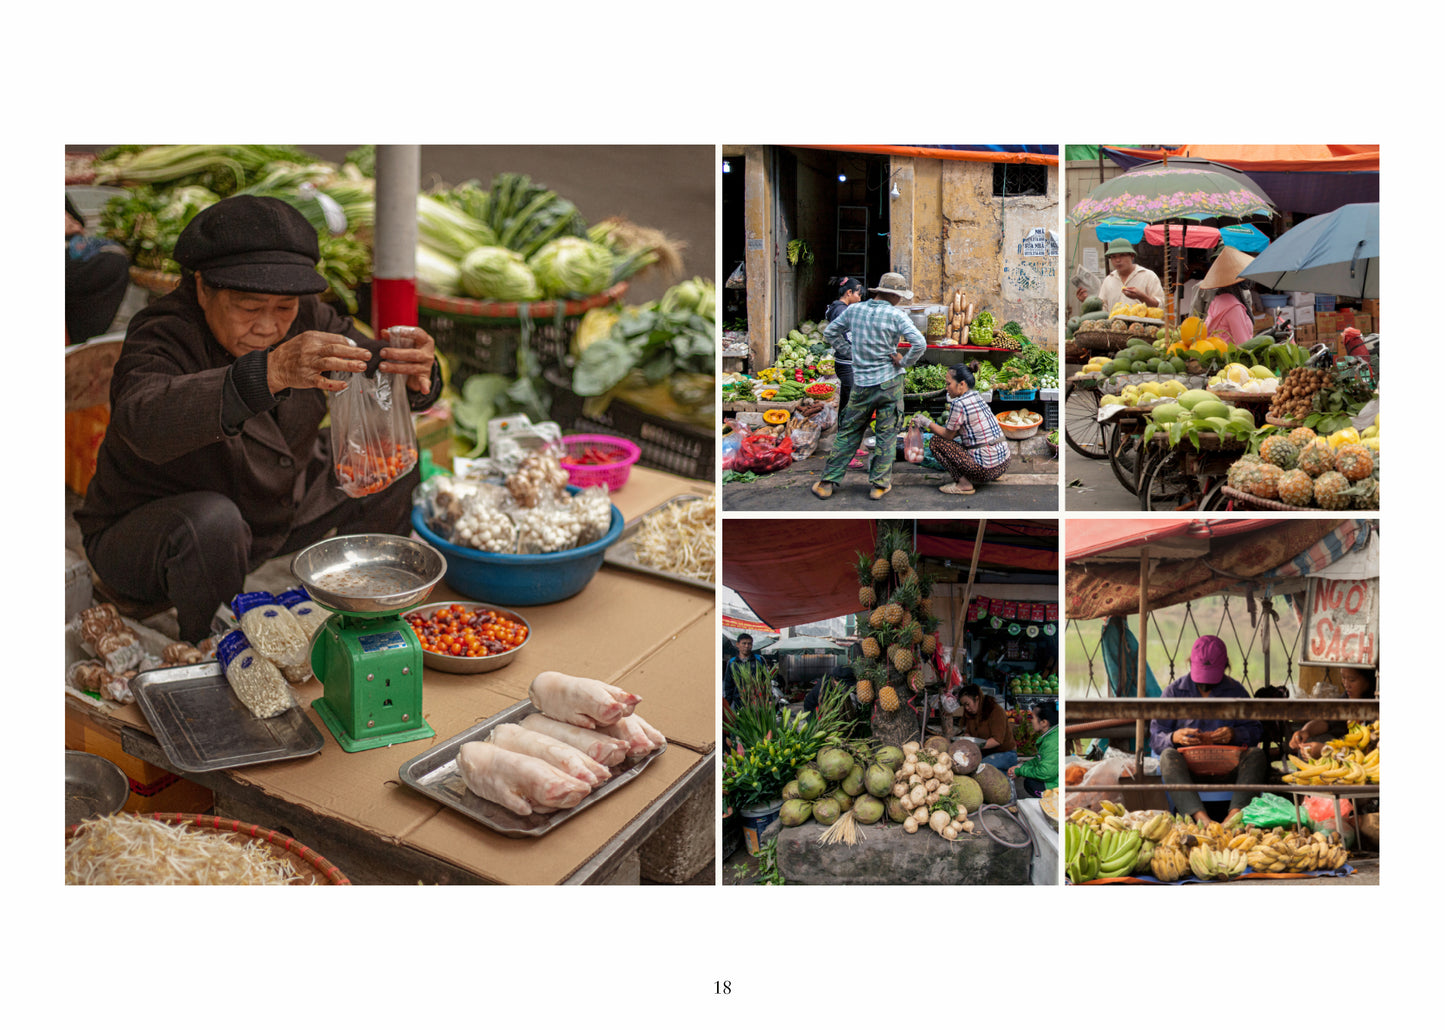 Food Odyssey Hanoi